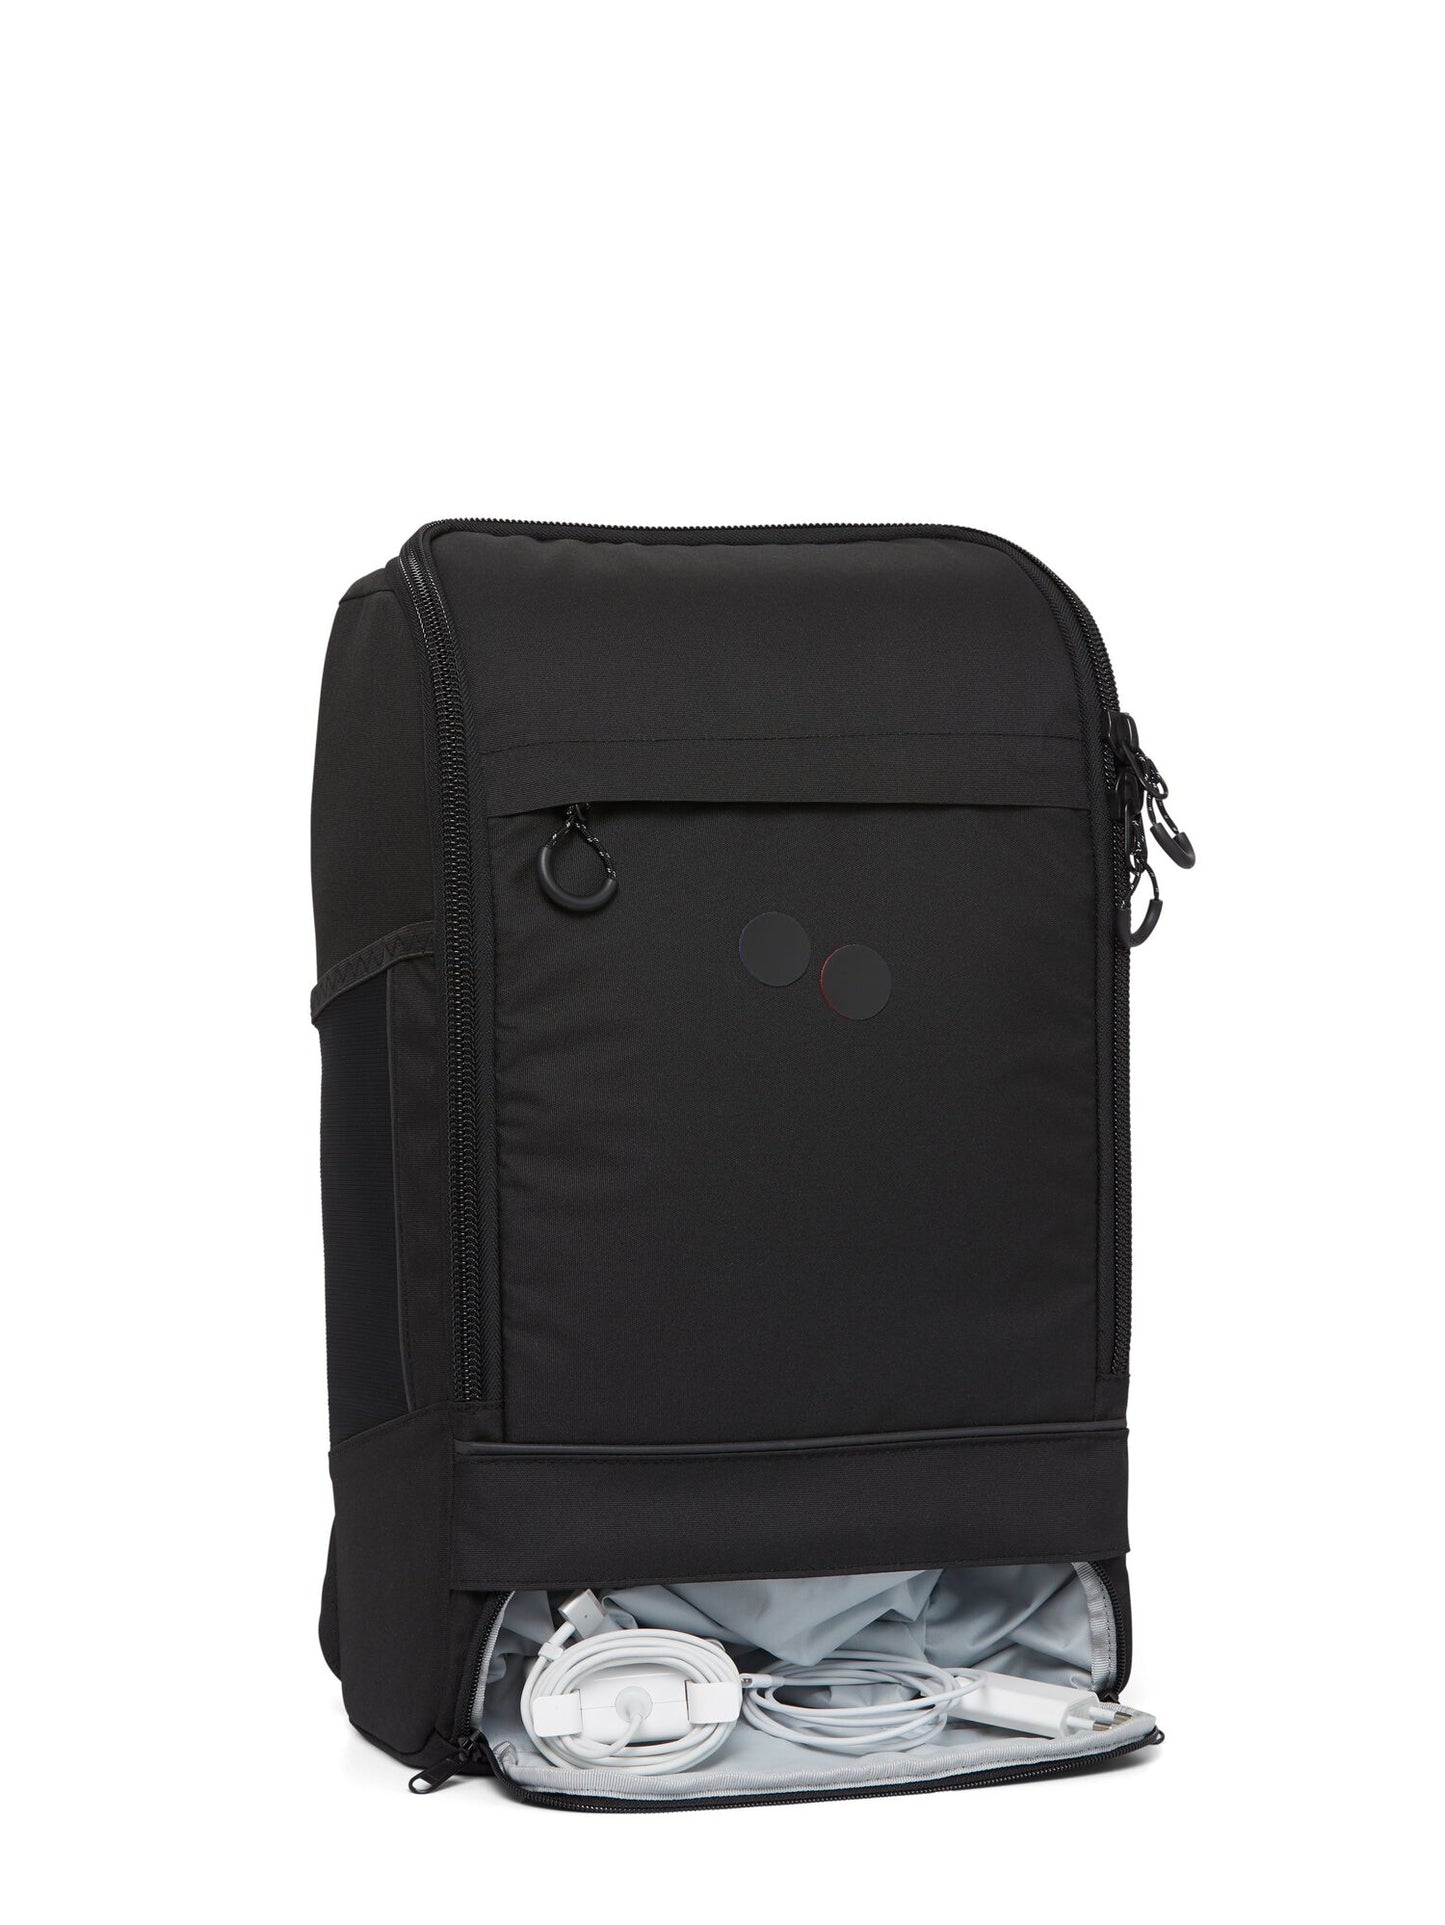 pinqponq-backpack-cubik-medium-rooted-black-detail